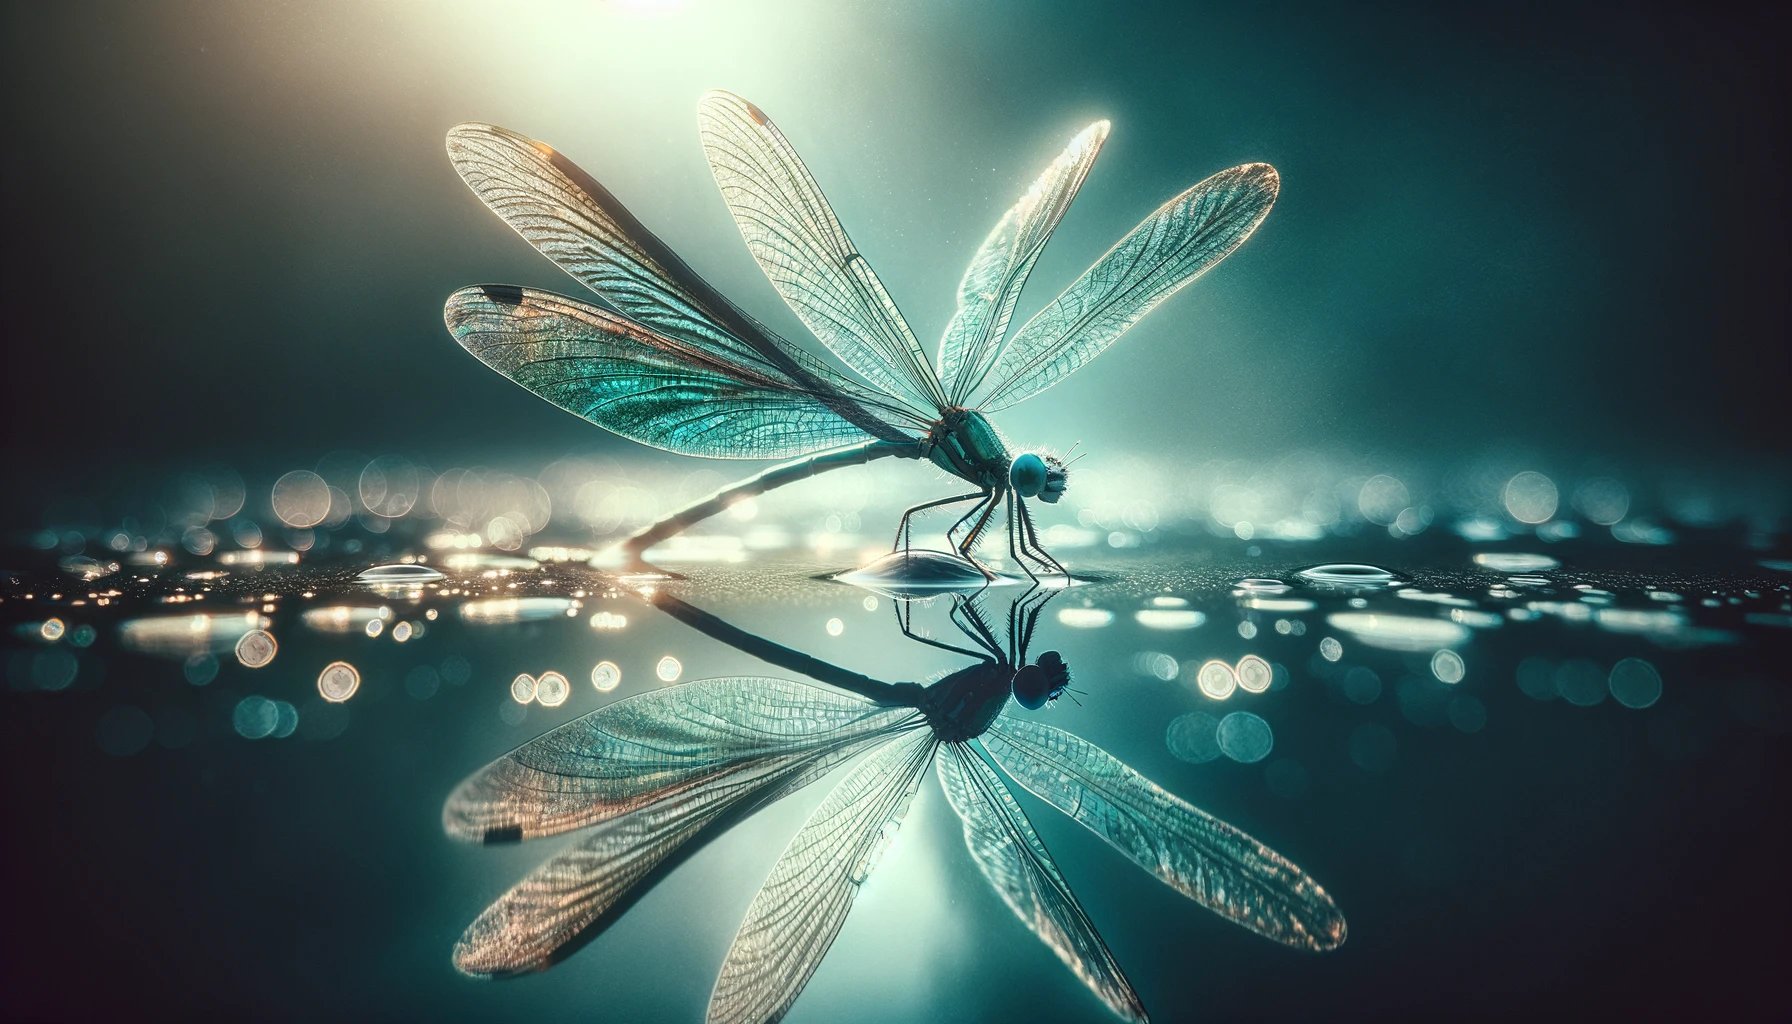 simbolismo espiritual de la libélula en la naturaleza